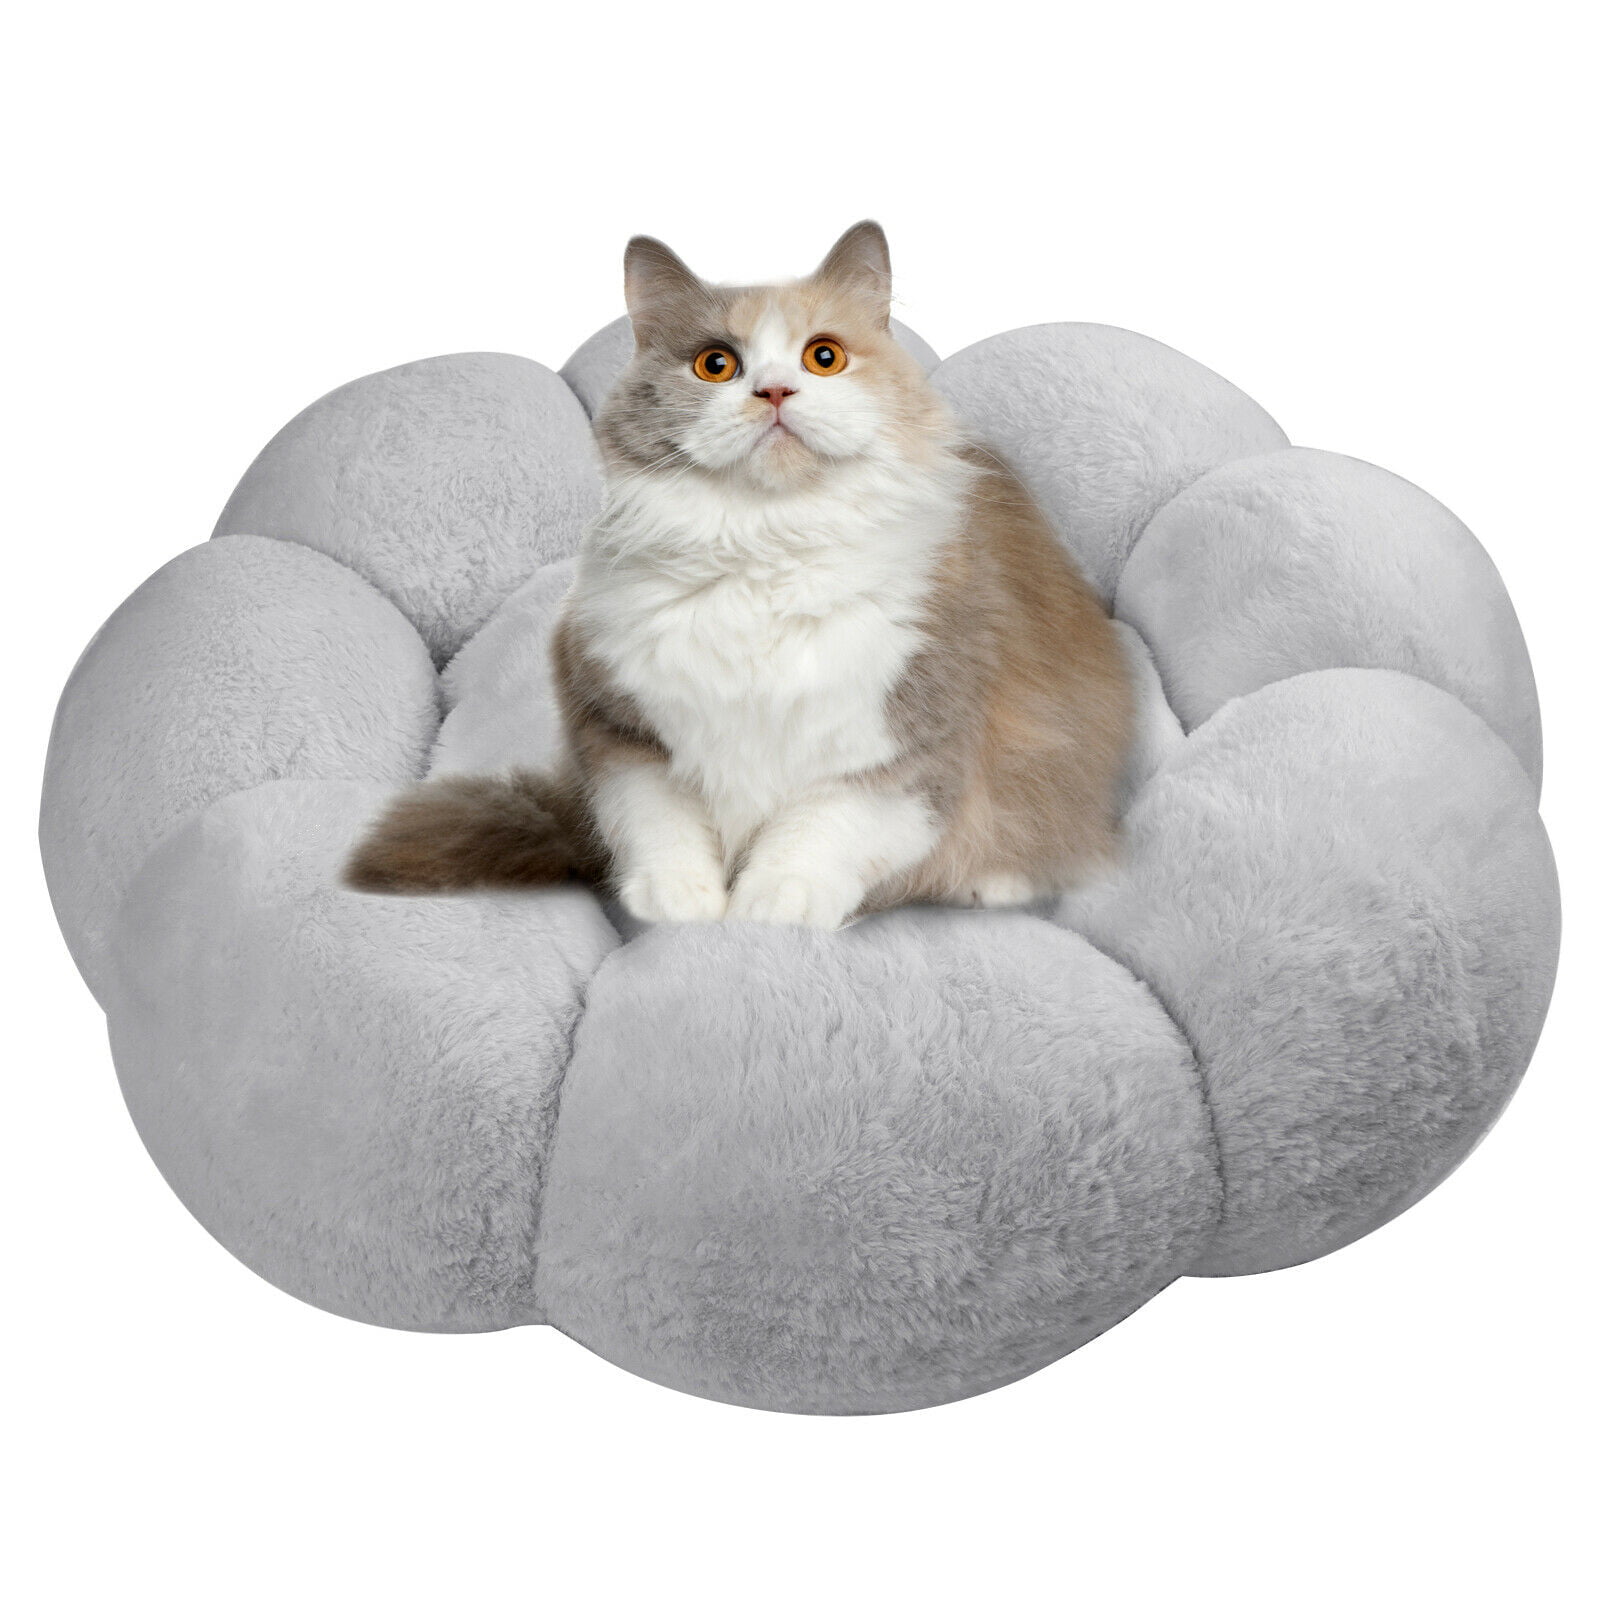 Soft Pet Bed ZEBRA PRINT Dog Cat Puppy Kitten Soft Fleece 3 Sizes Pink or Grey 